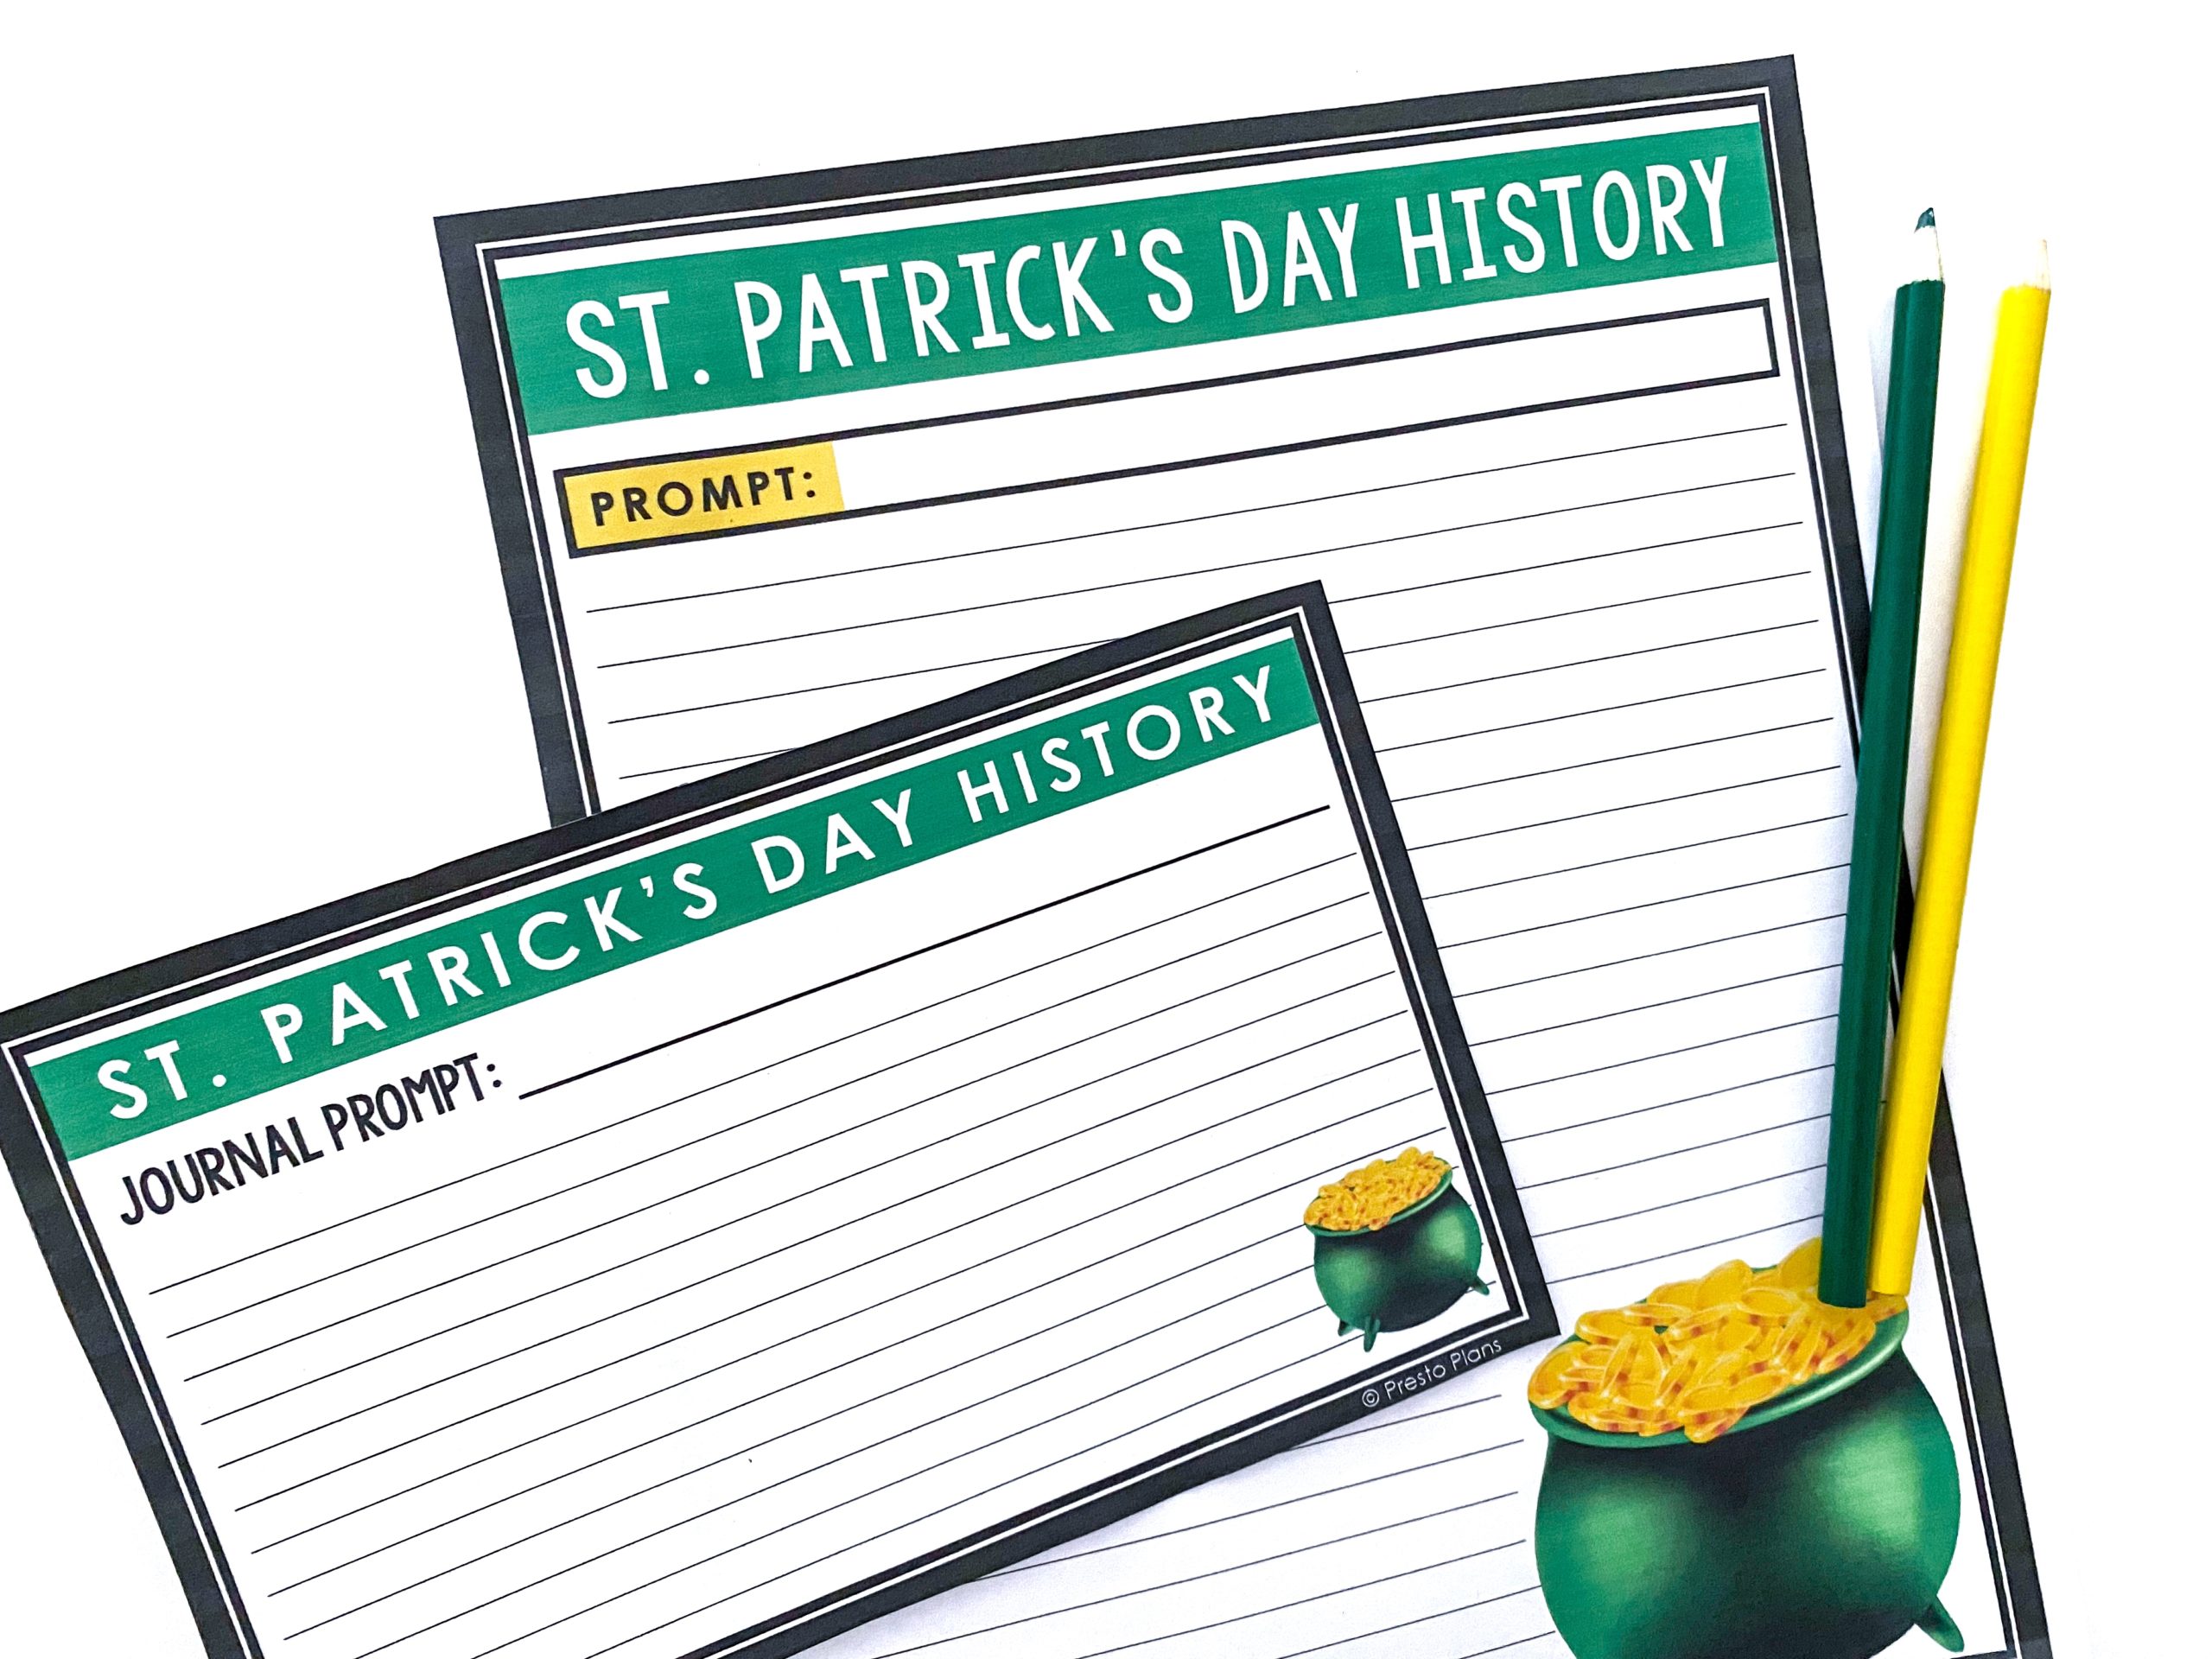 St Patrick's Day History ELA Resource